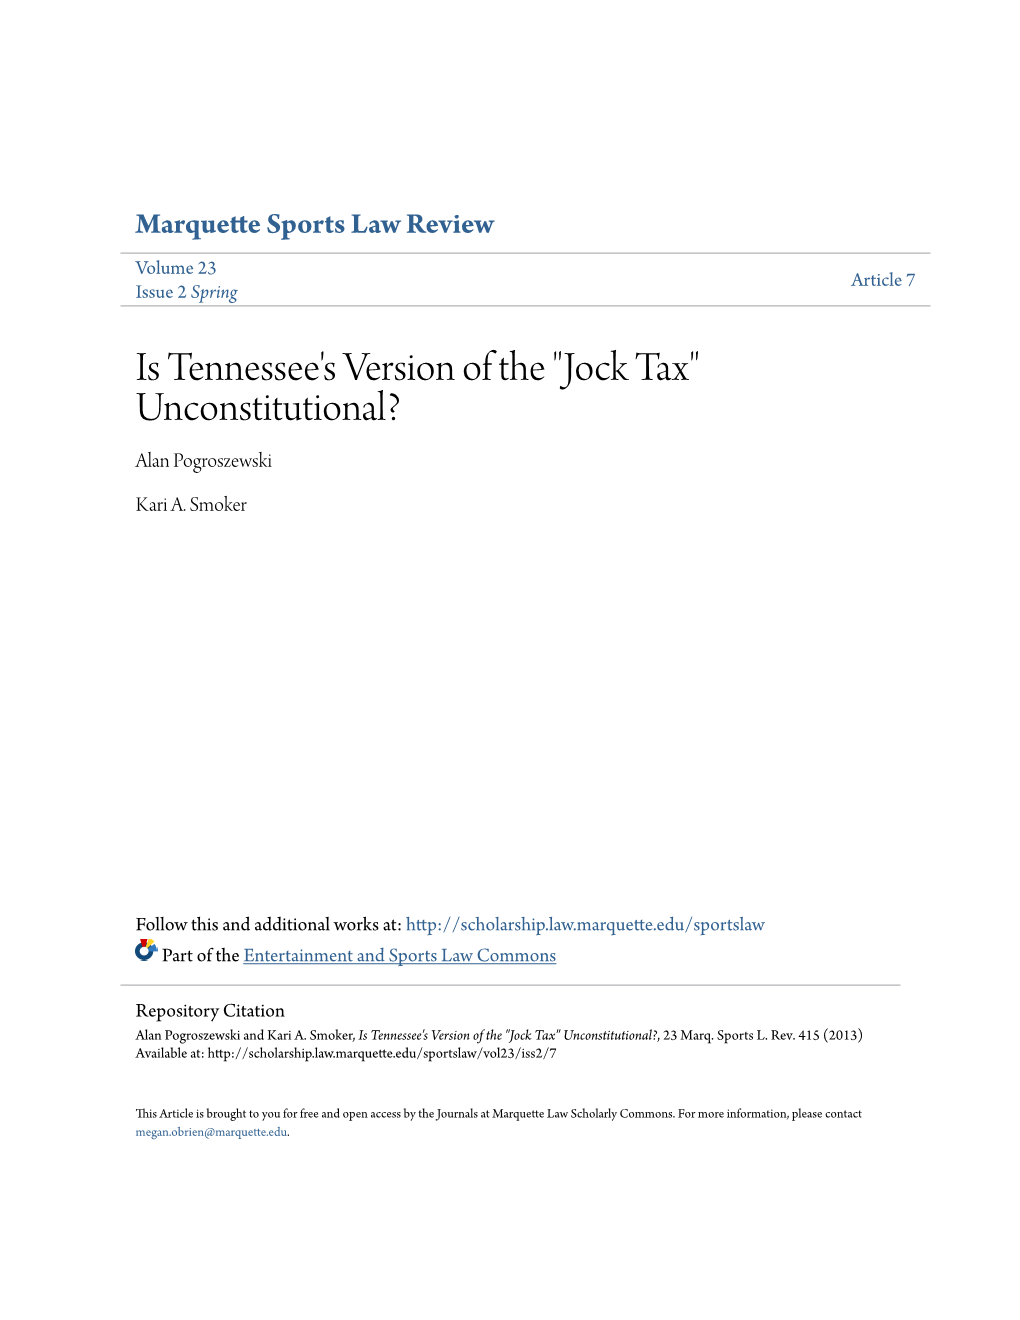 Is Tennessee's Version of the "Jock Tax" Unconstitutional? Alan Pogroszewski